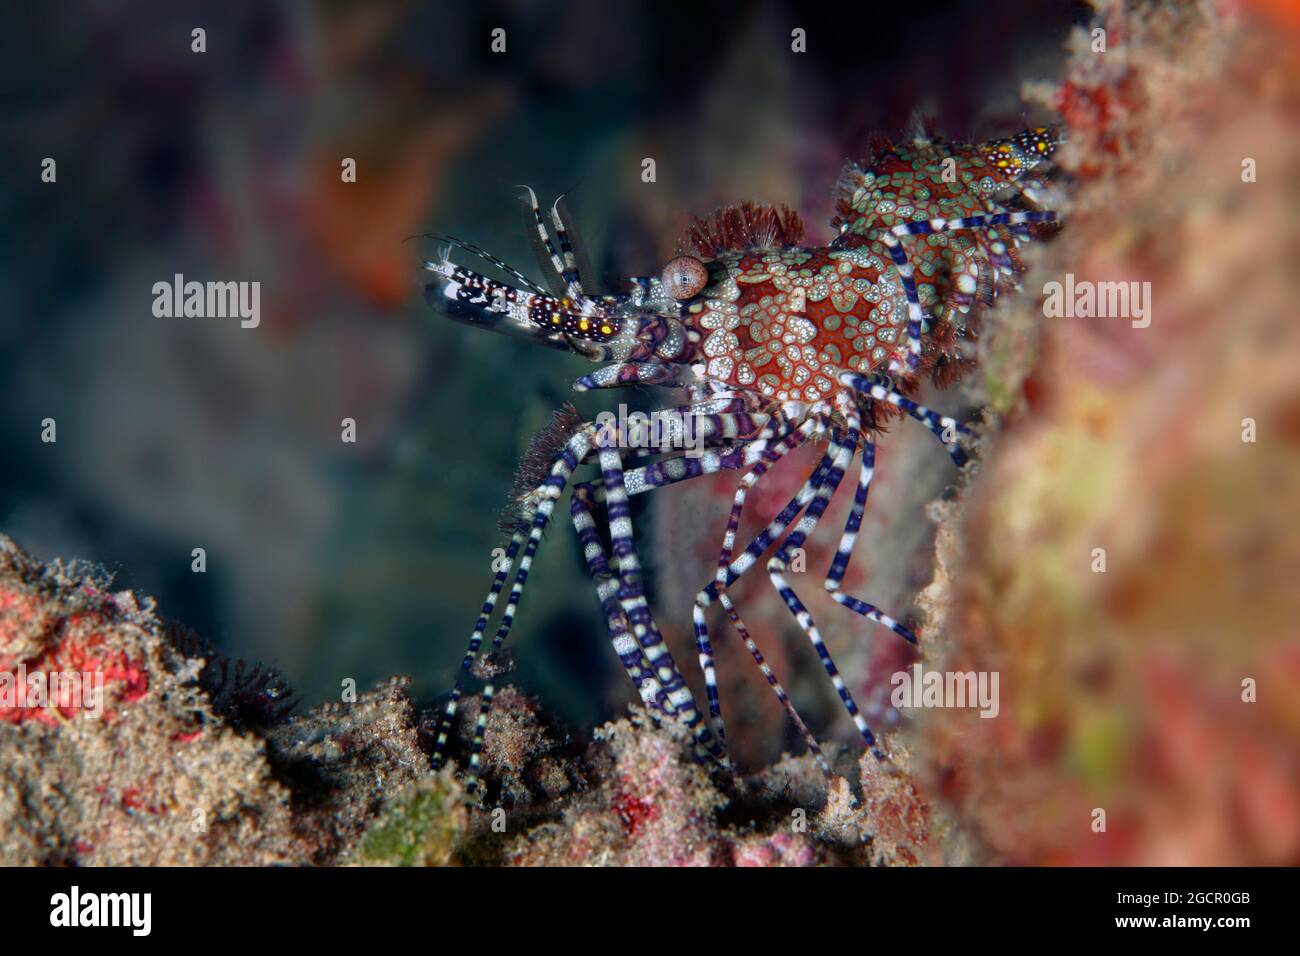 Common marbled shrimp (Saron marmoratus), Purple-footed marble shrimp, Red Sea, Aqaba, Kingdom of Jordan Stock Photo